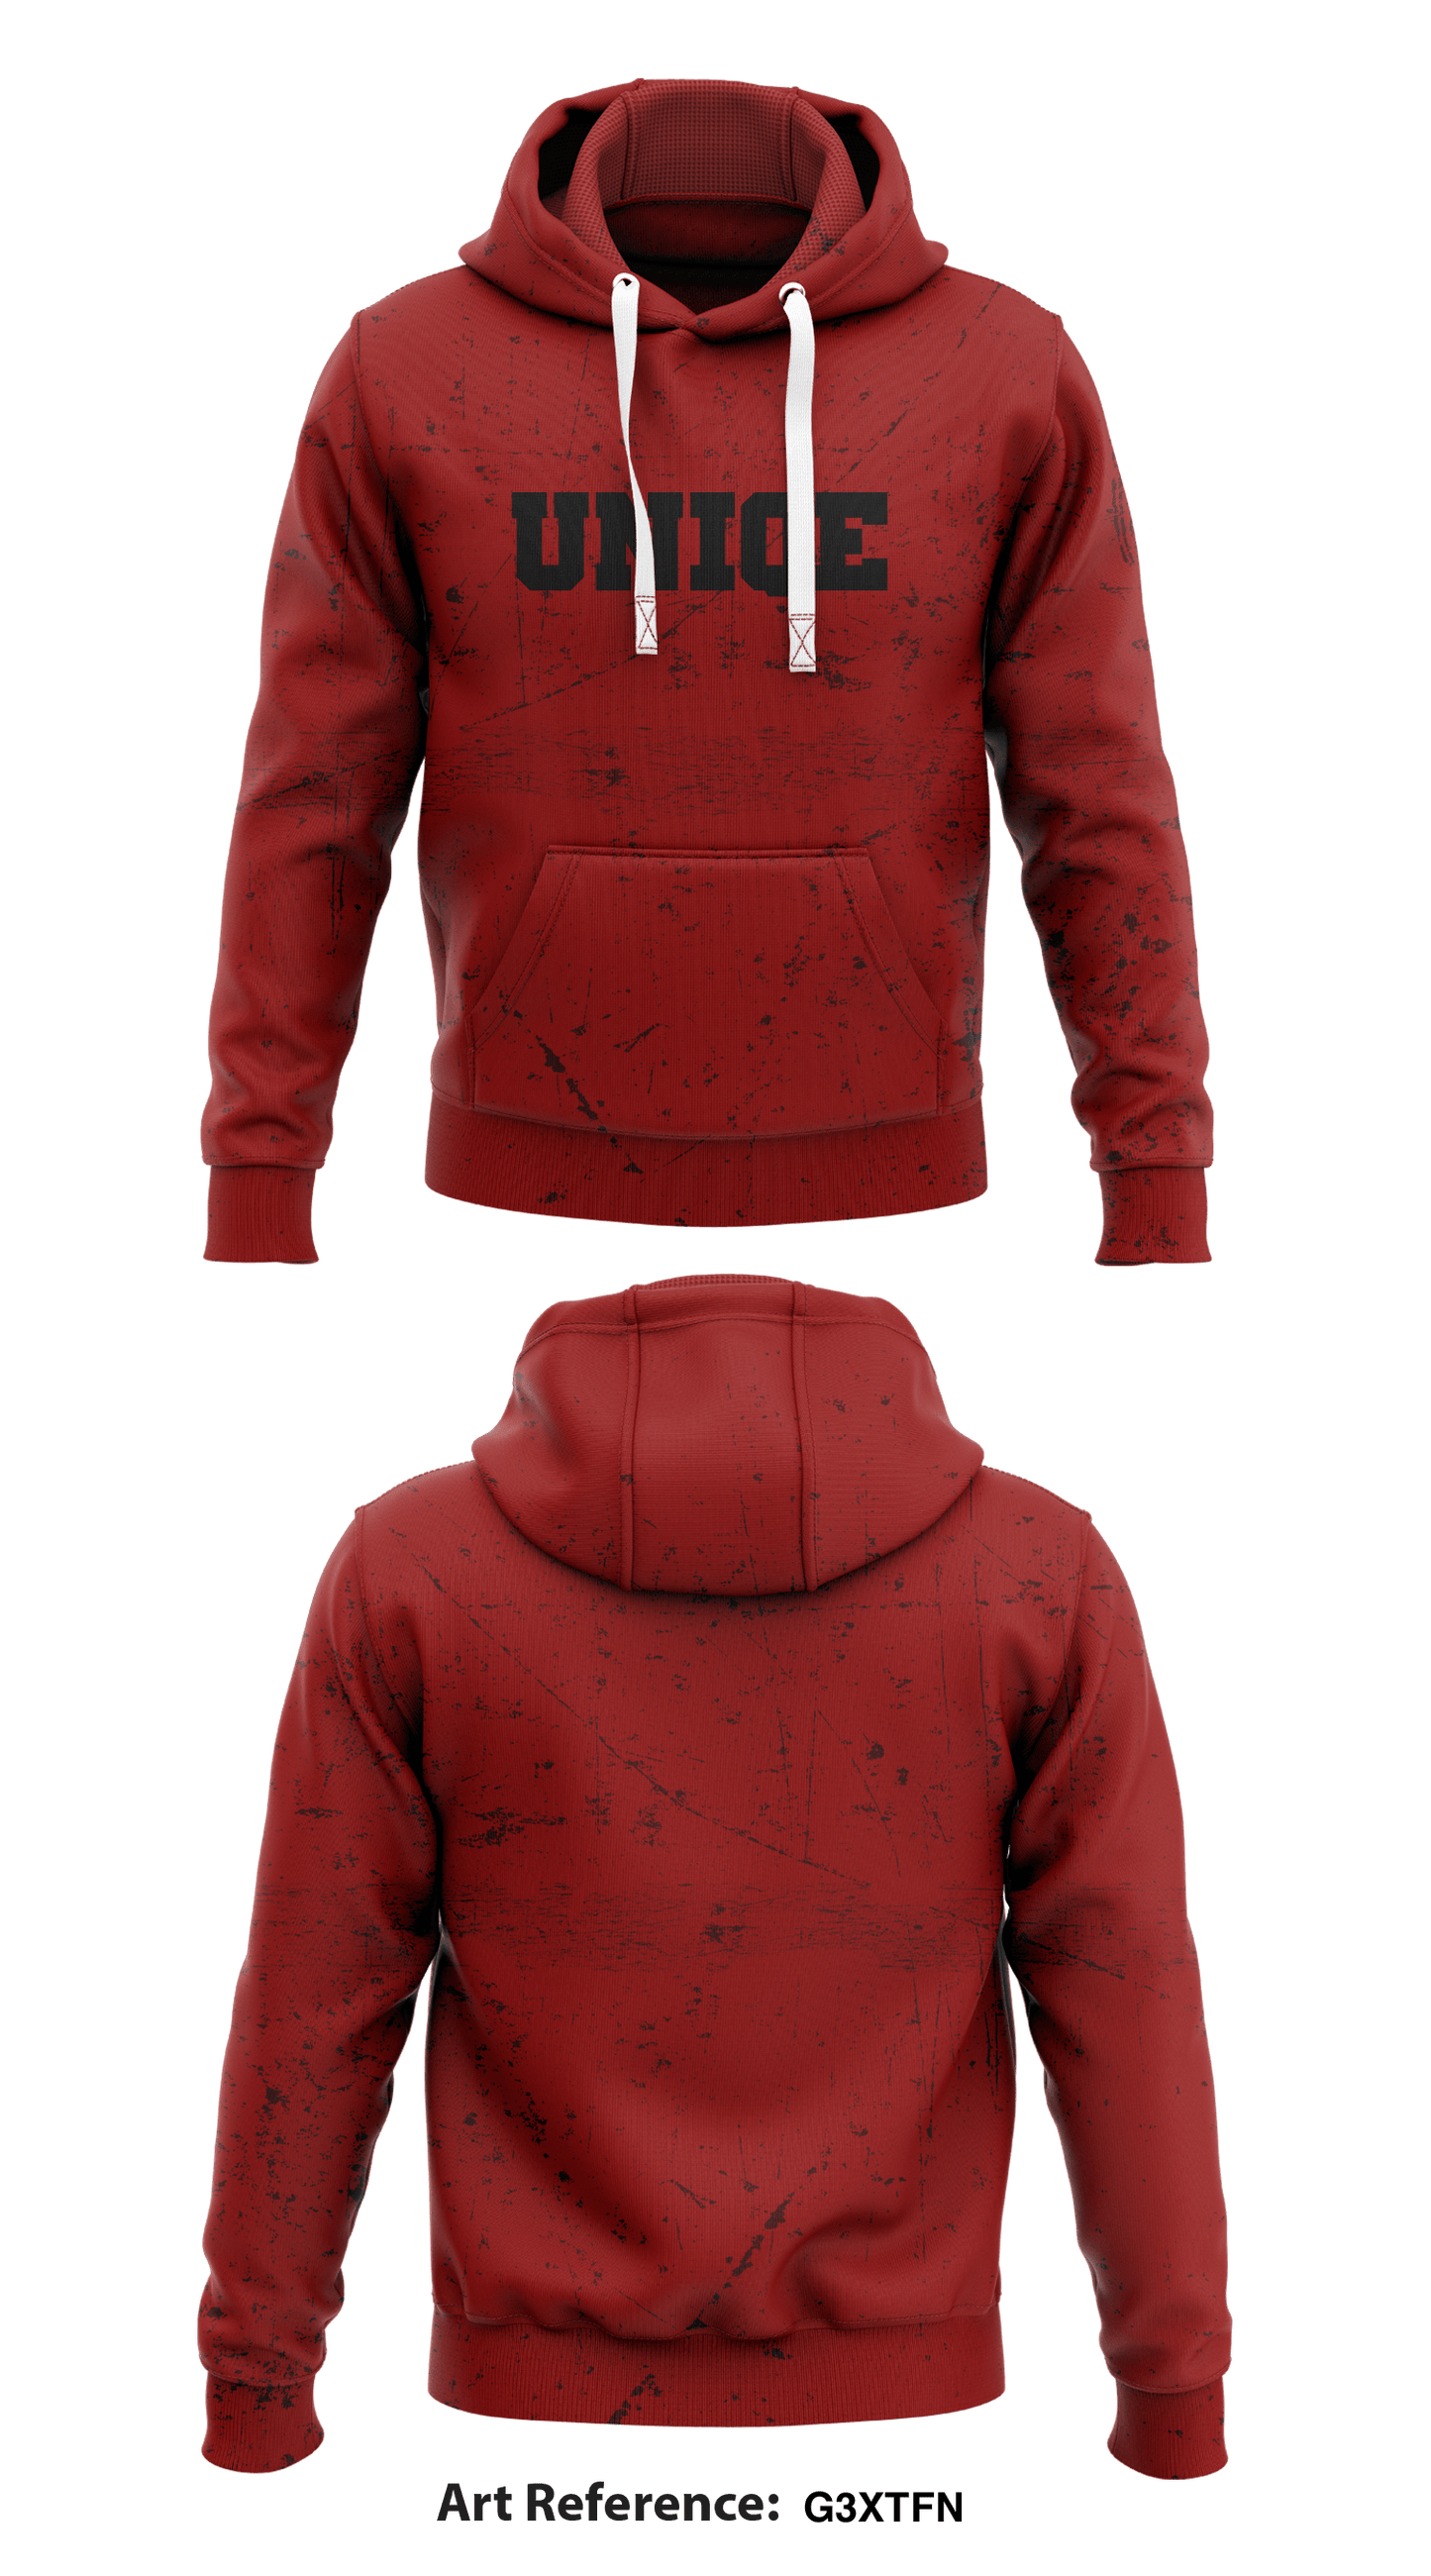 Uniqe Store 1  Core Men's Hooded Performance Sweatshirt - G3xtfN